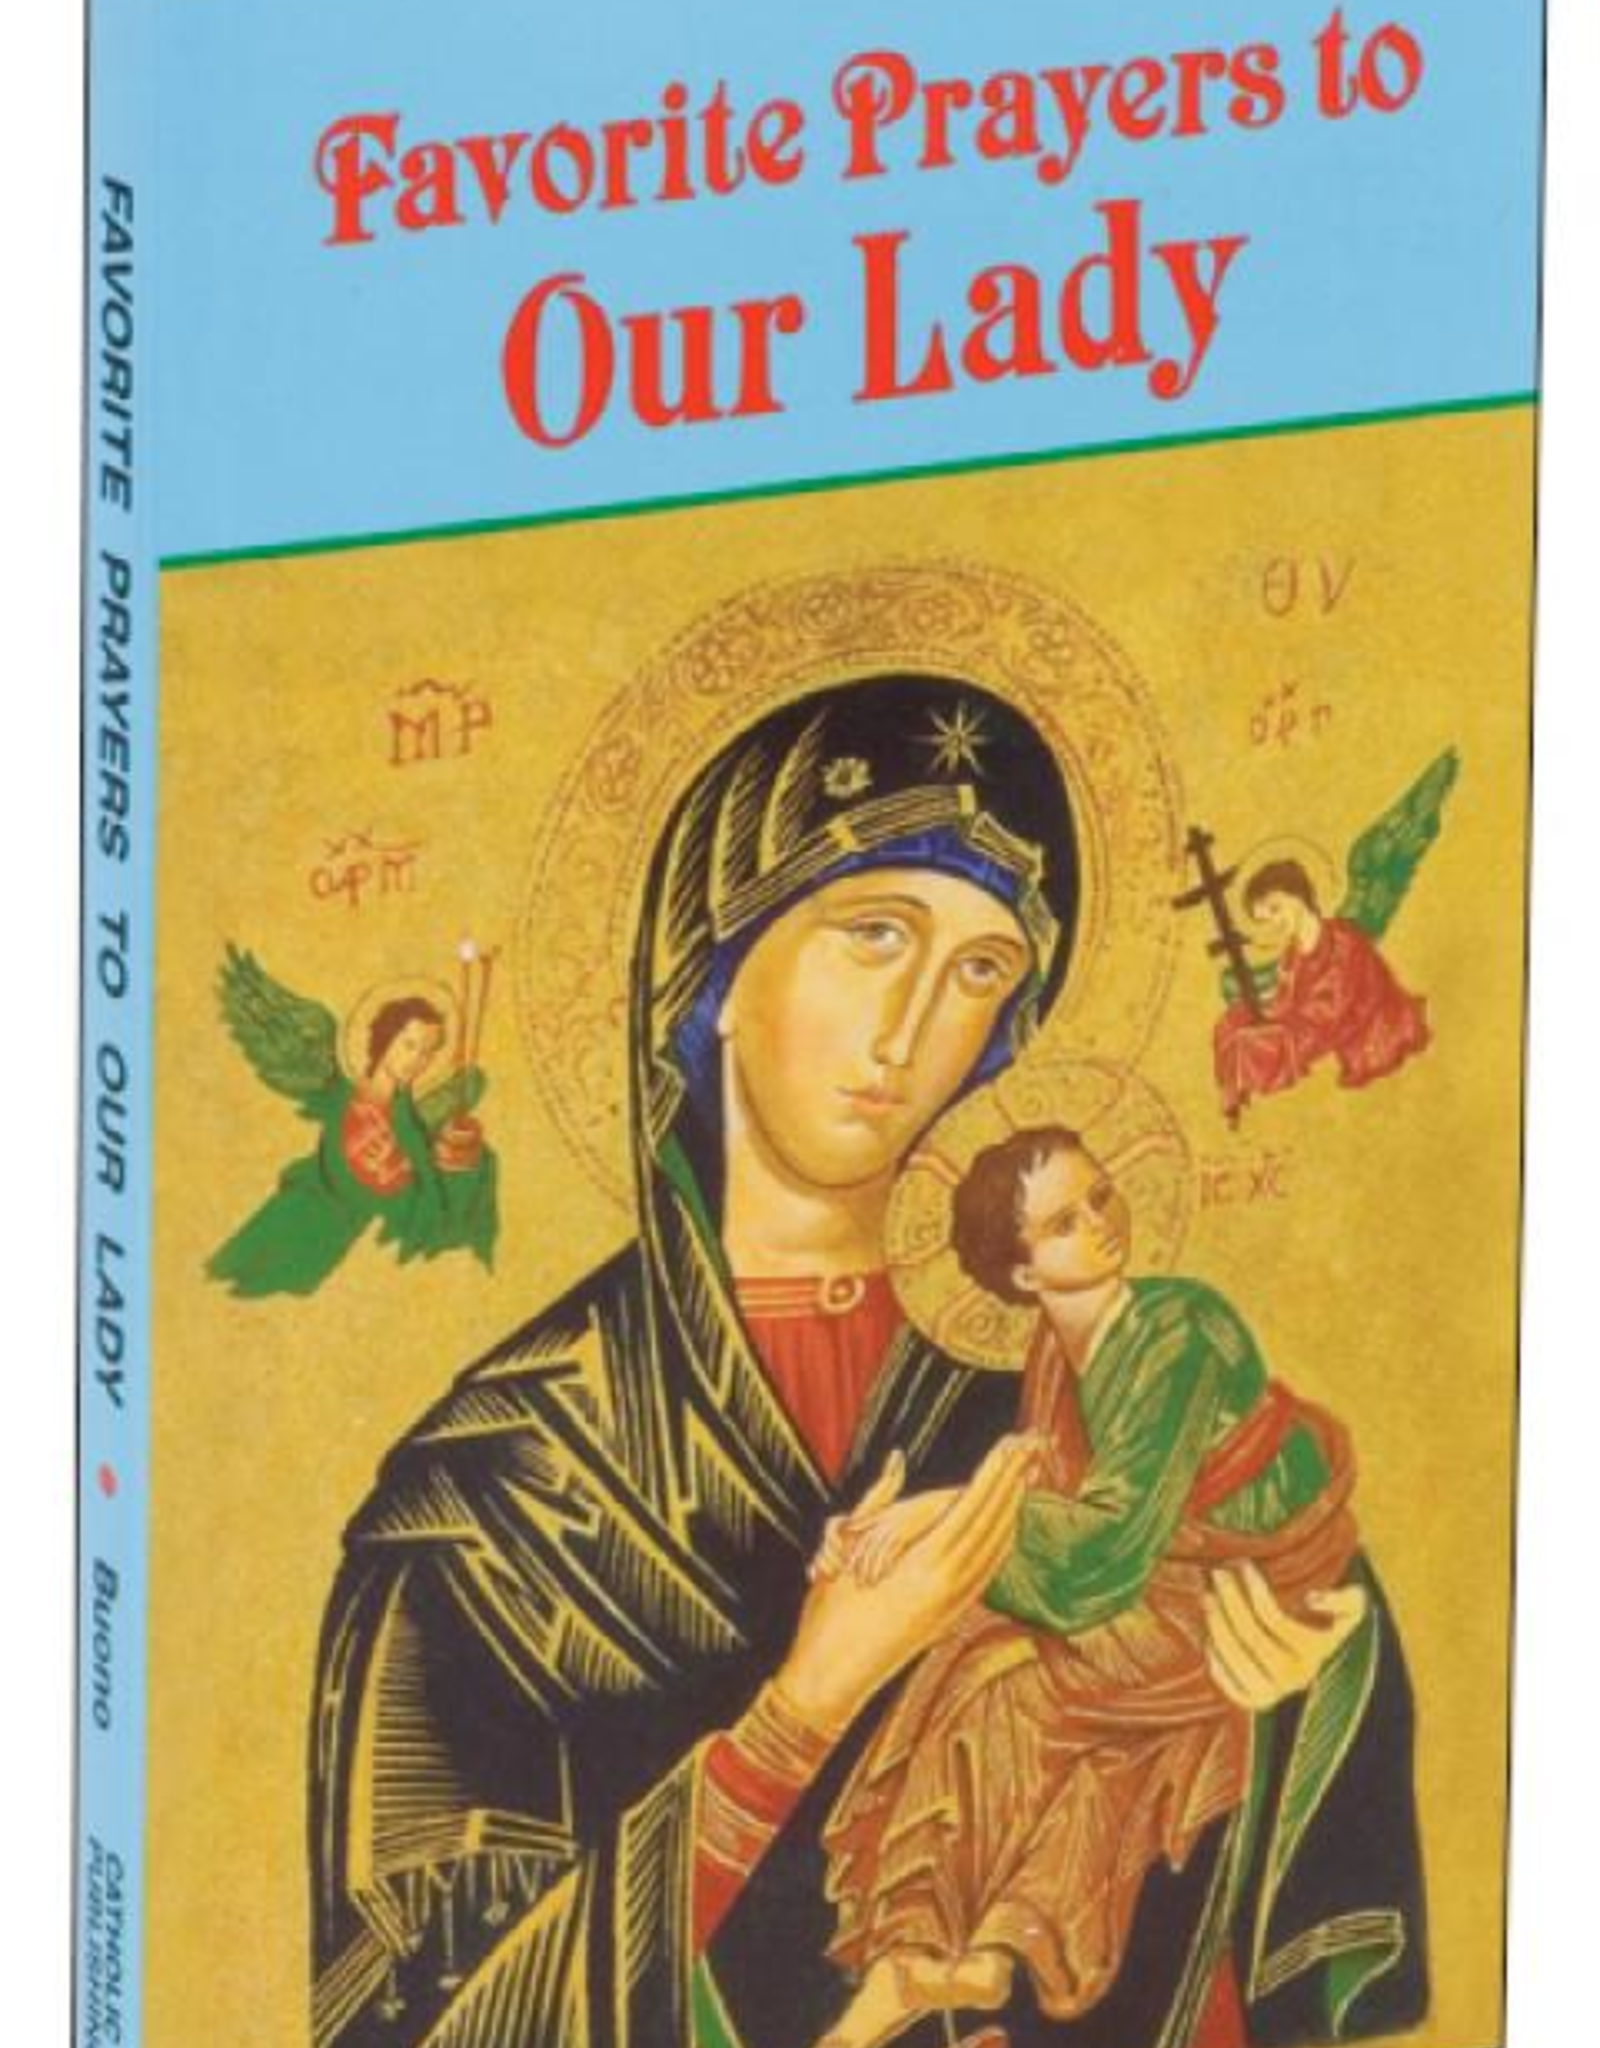 Catholic Book Publishing Favorite Prayers to Our Lady, by Anthony M. Buono (paperback)